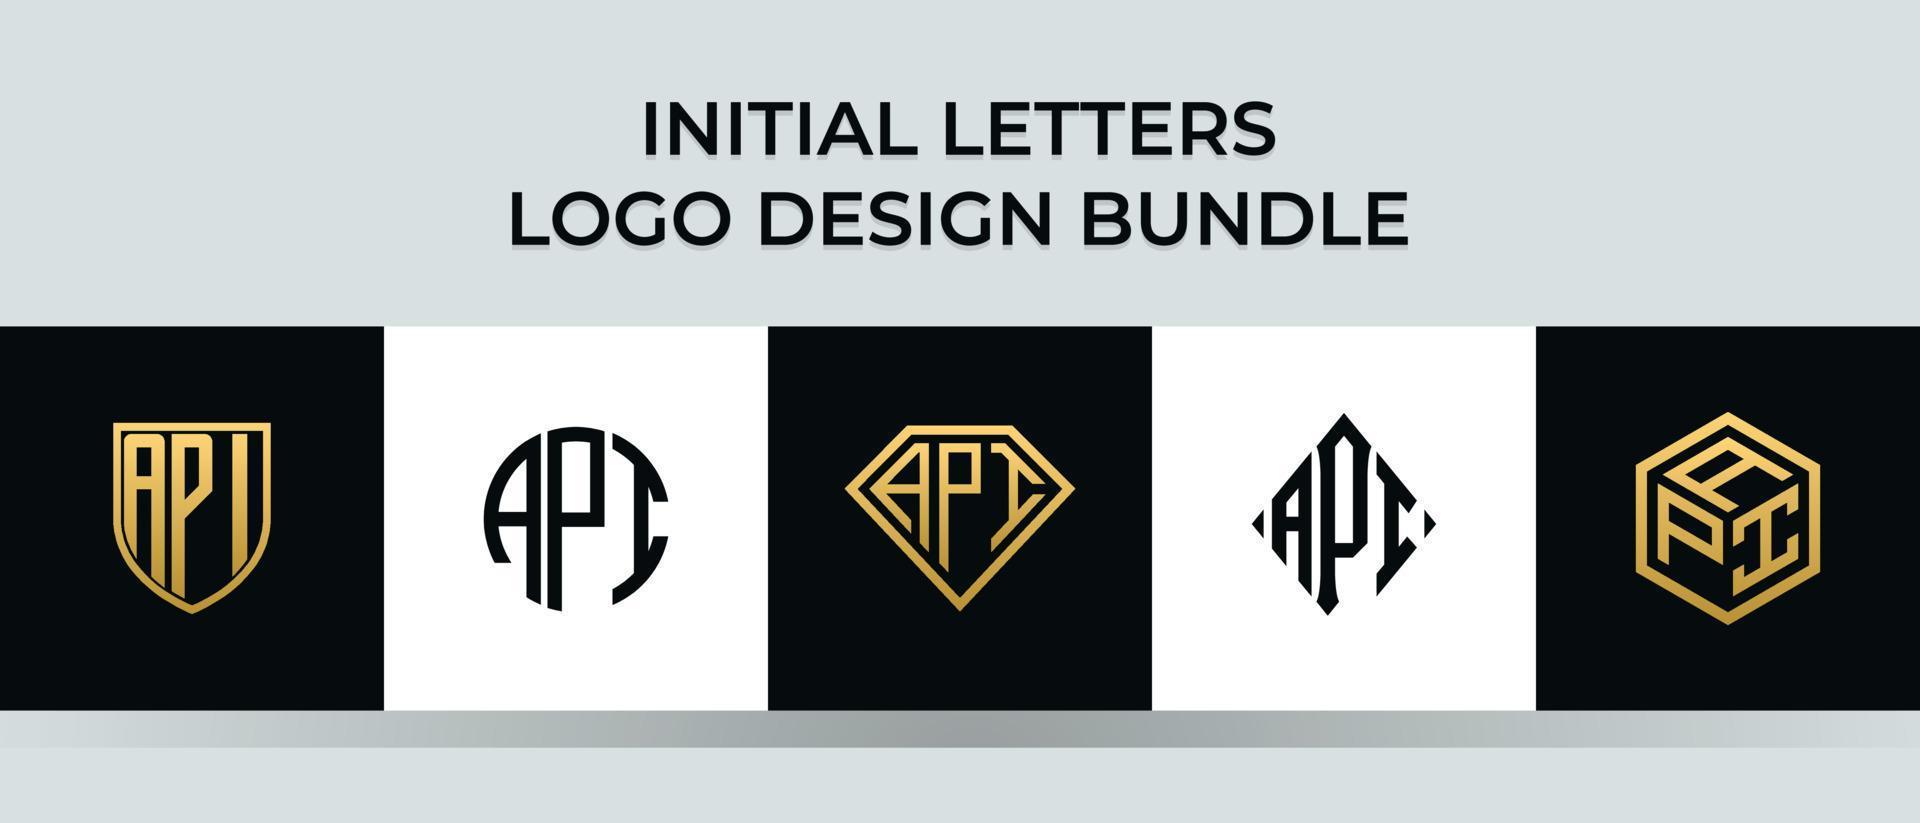 Initial letters API logo designs Bundle vector